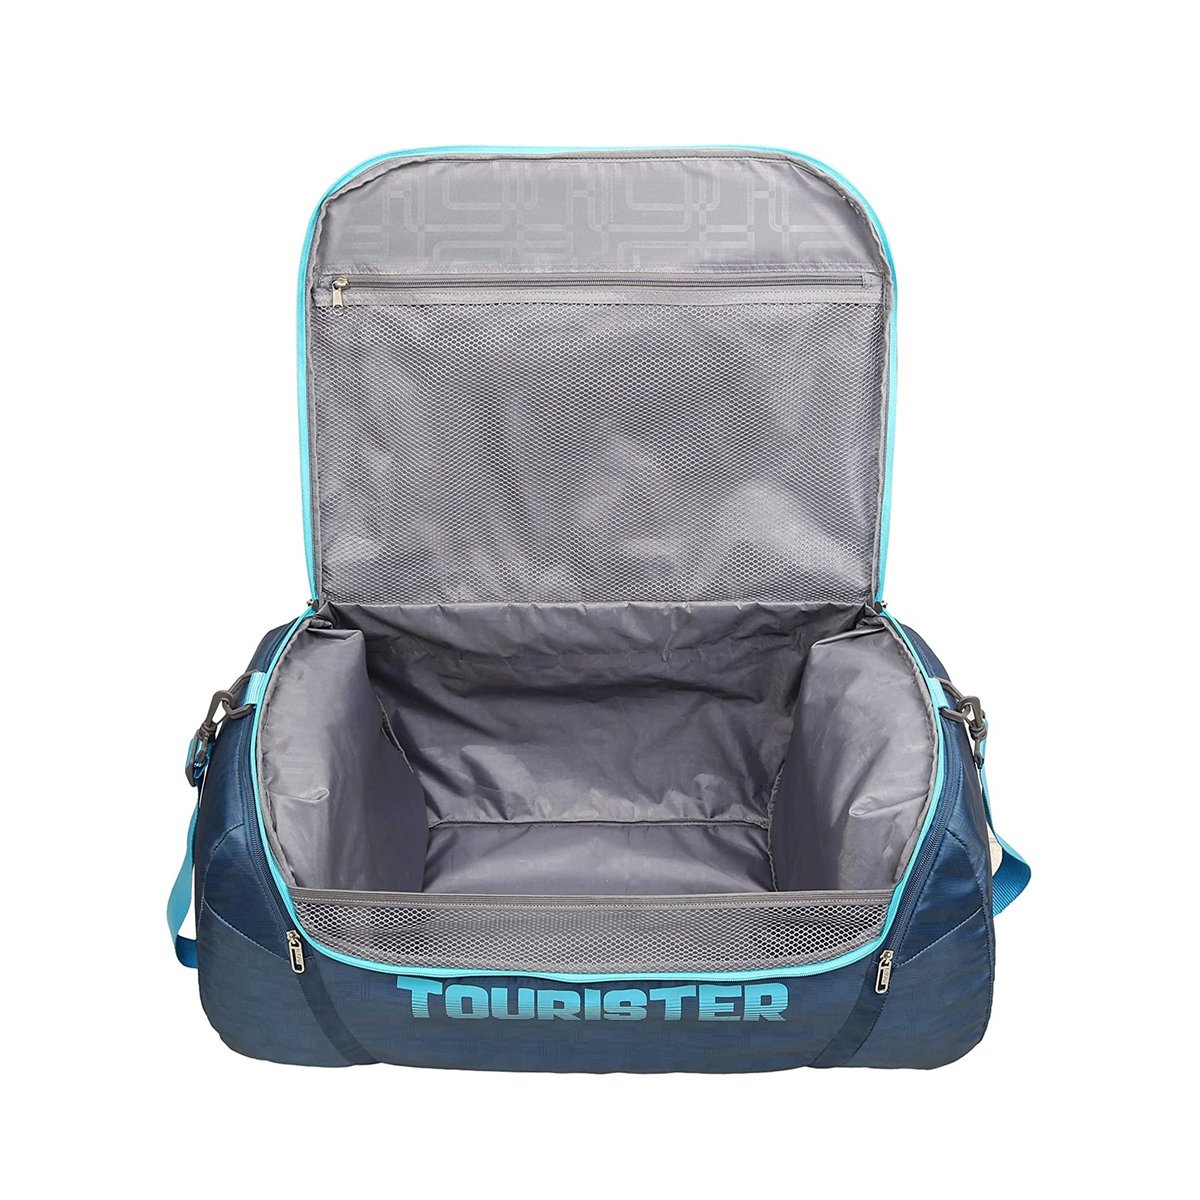 American Tourister Grid Duffle Bag, 55 cm, Blue